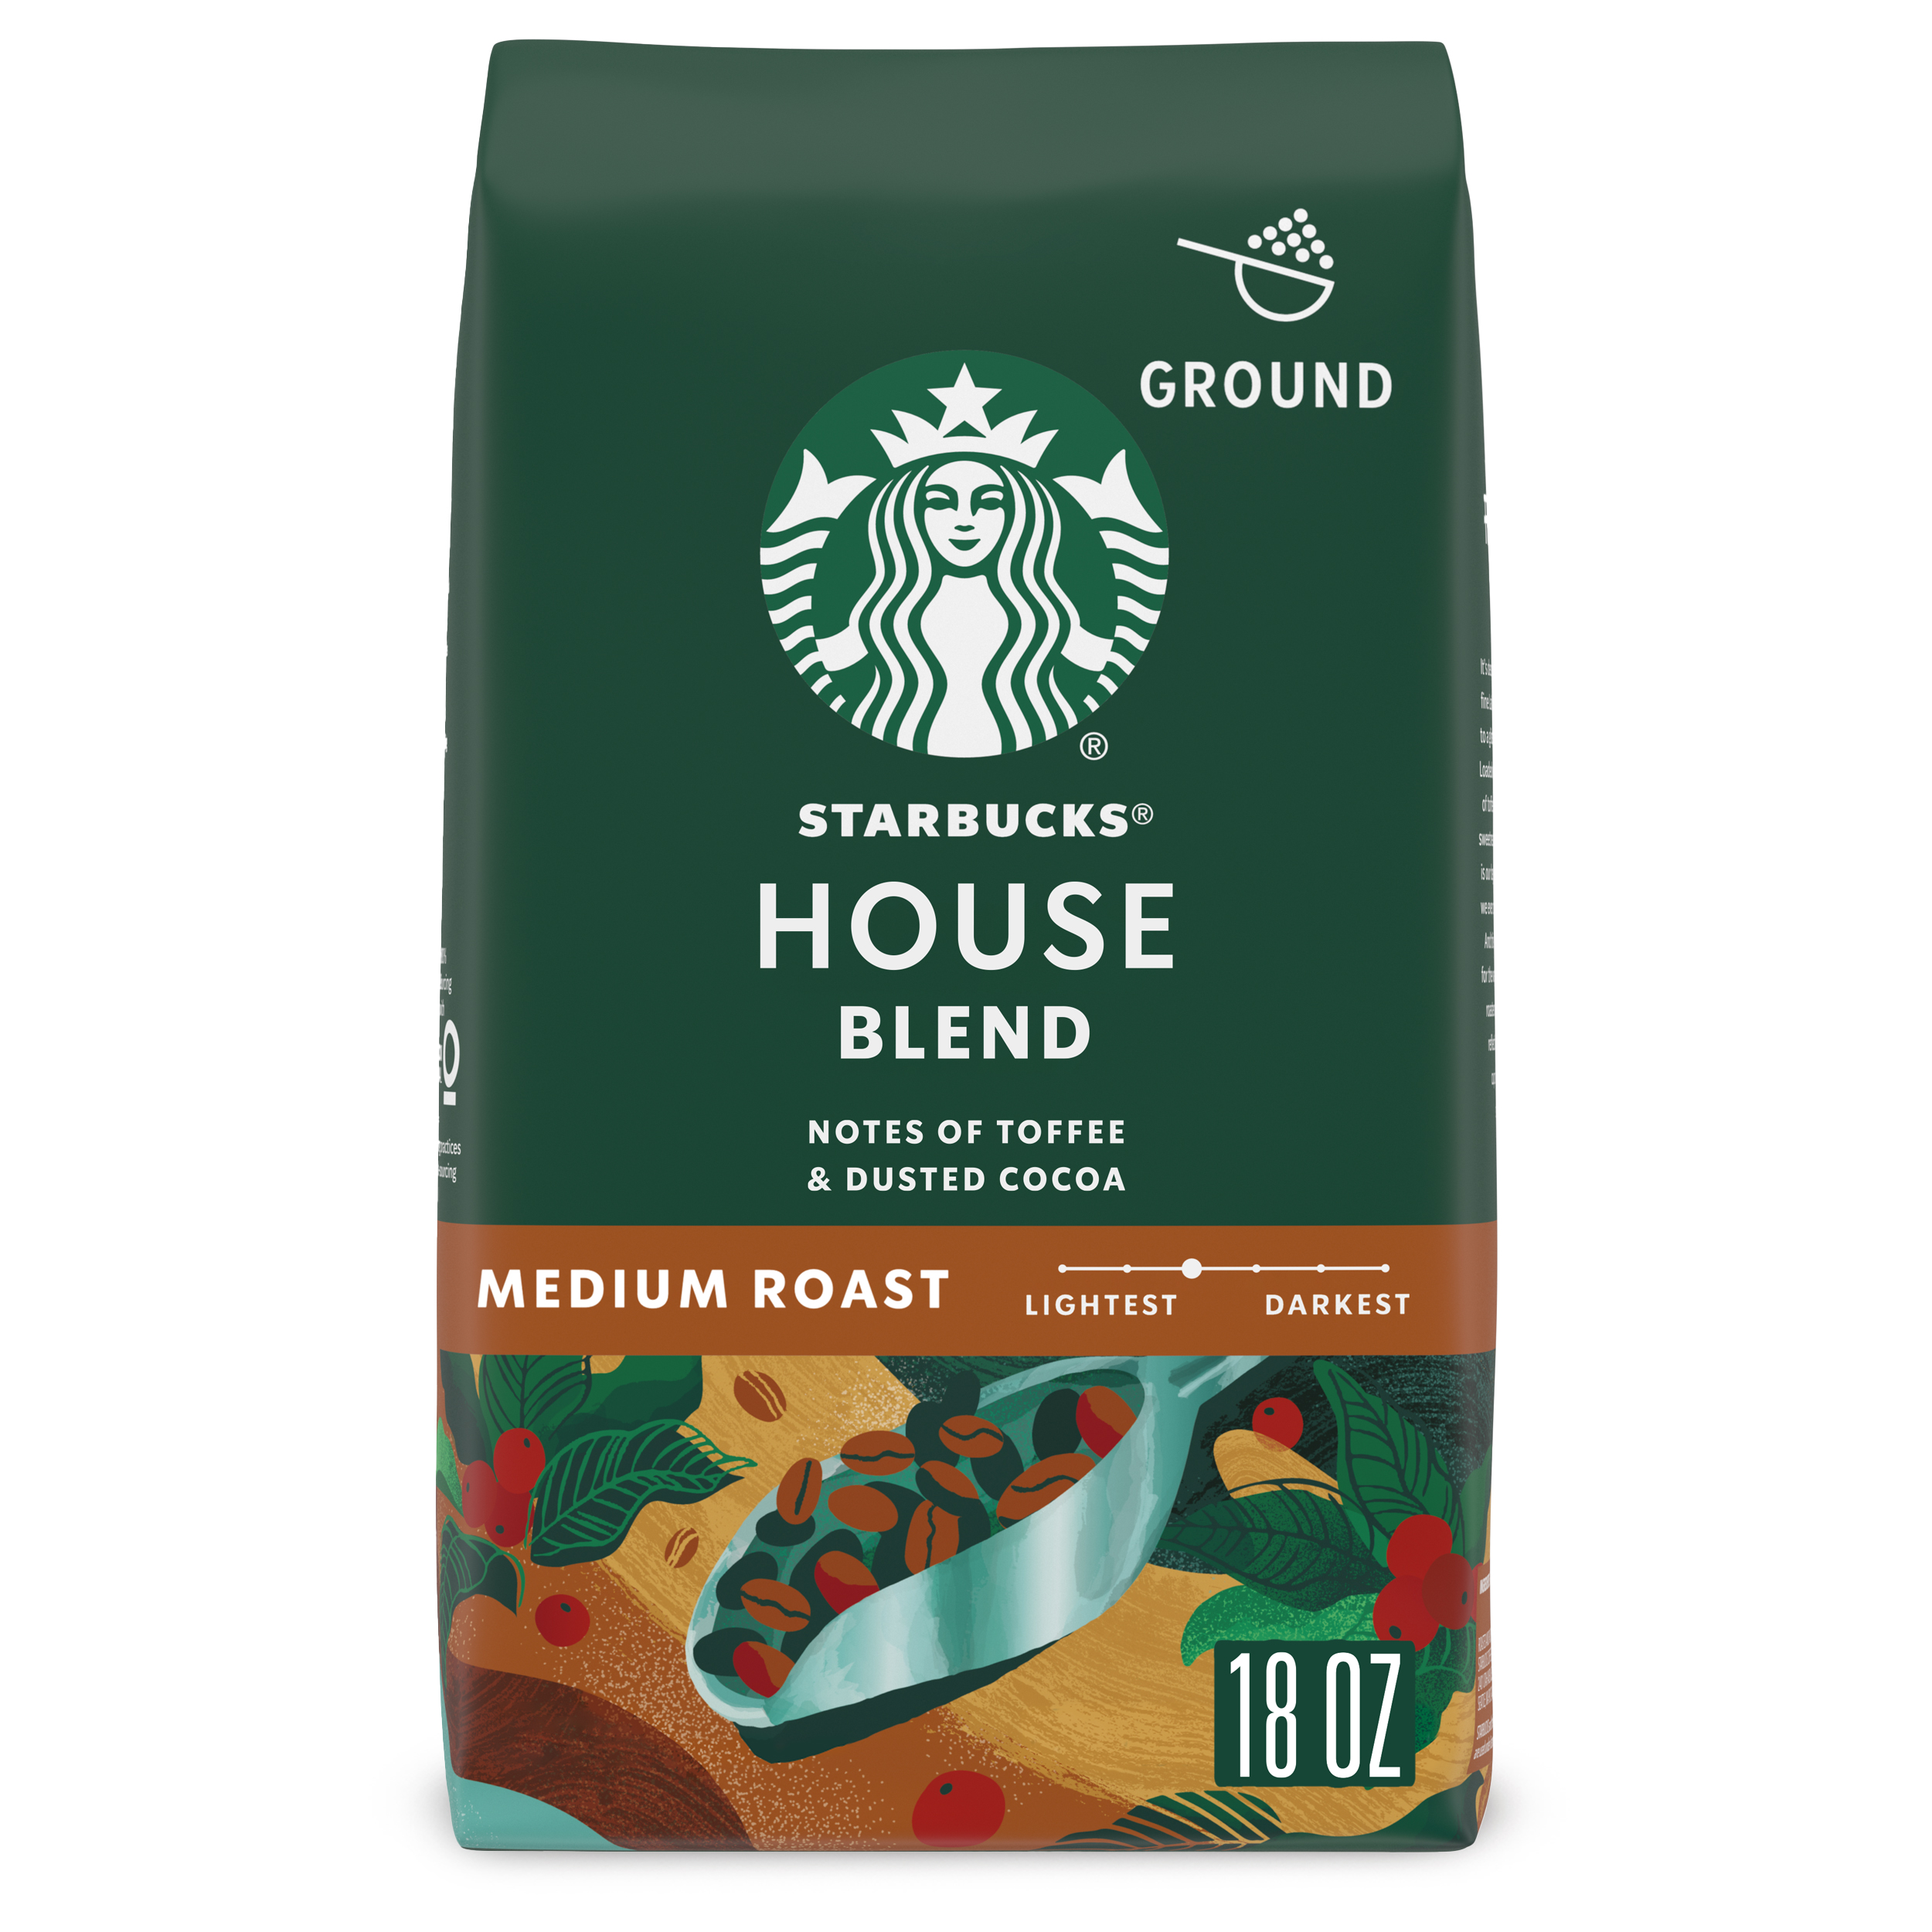 Starbucks Arabica Beans House Blend, Medium Roast, Ground Coffee, 18 oz - image 1 of 8